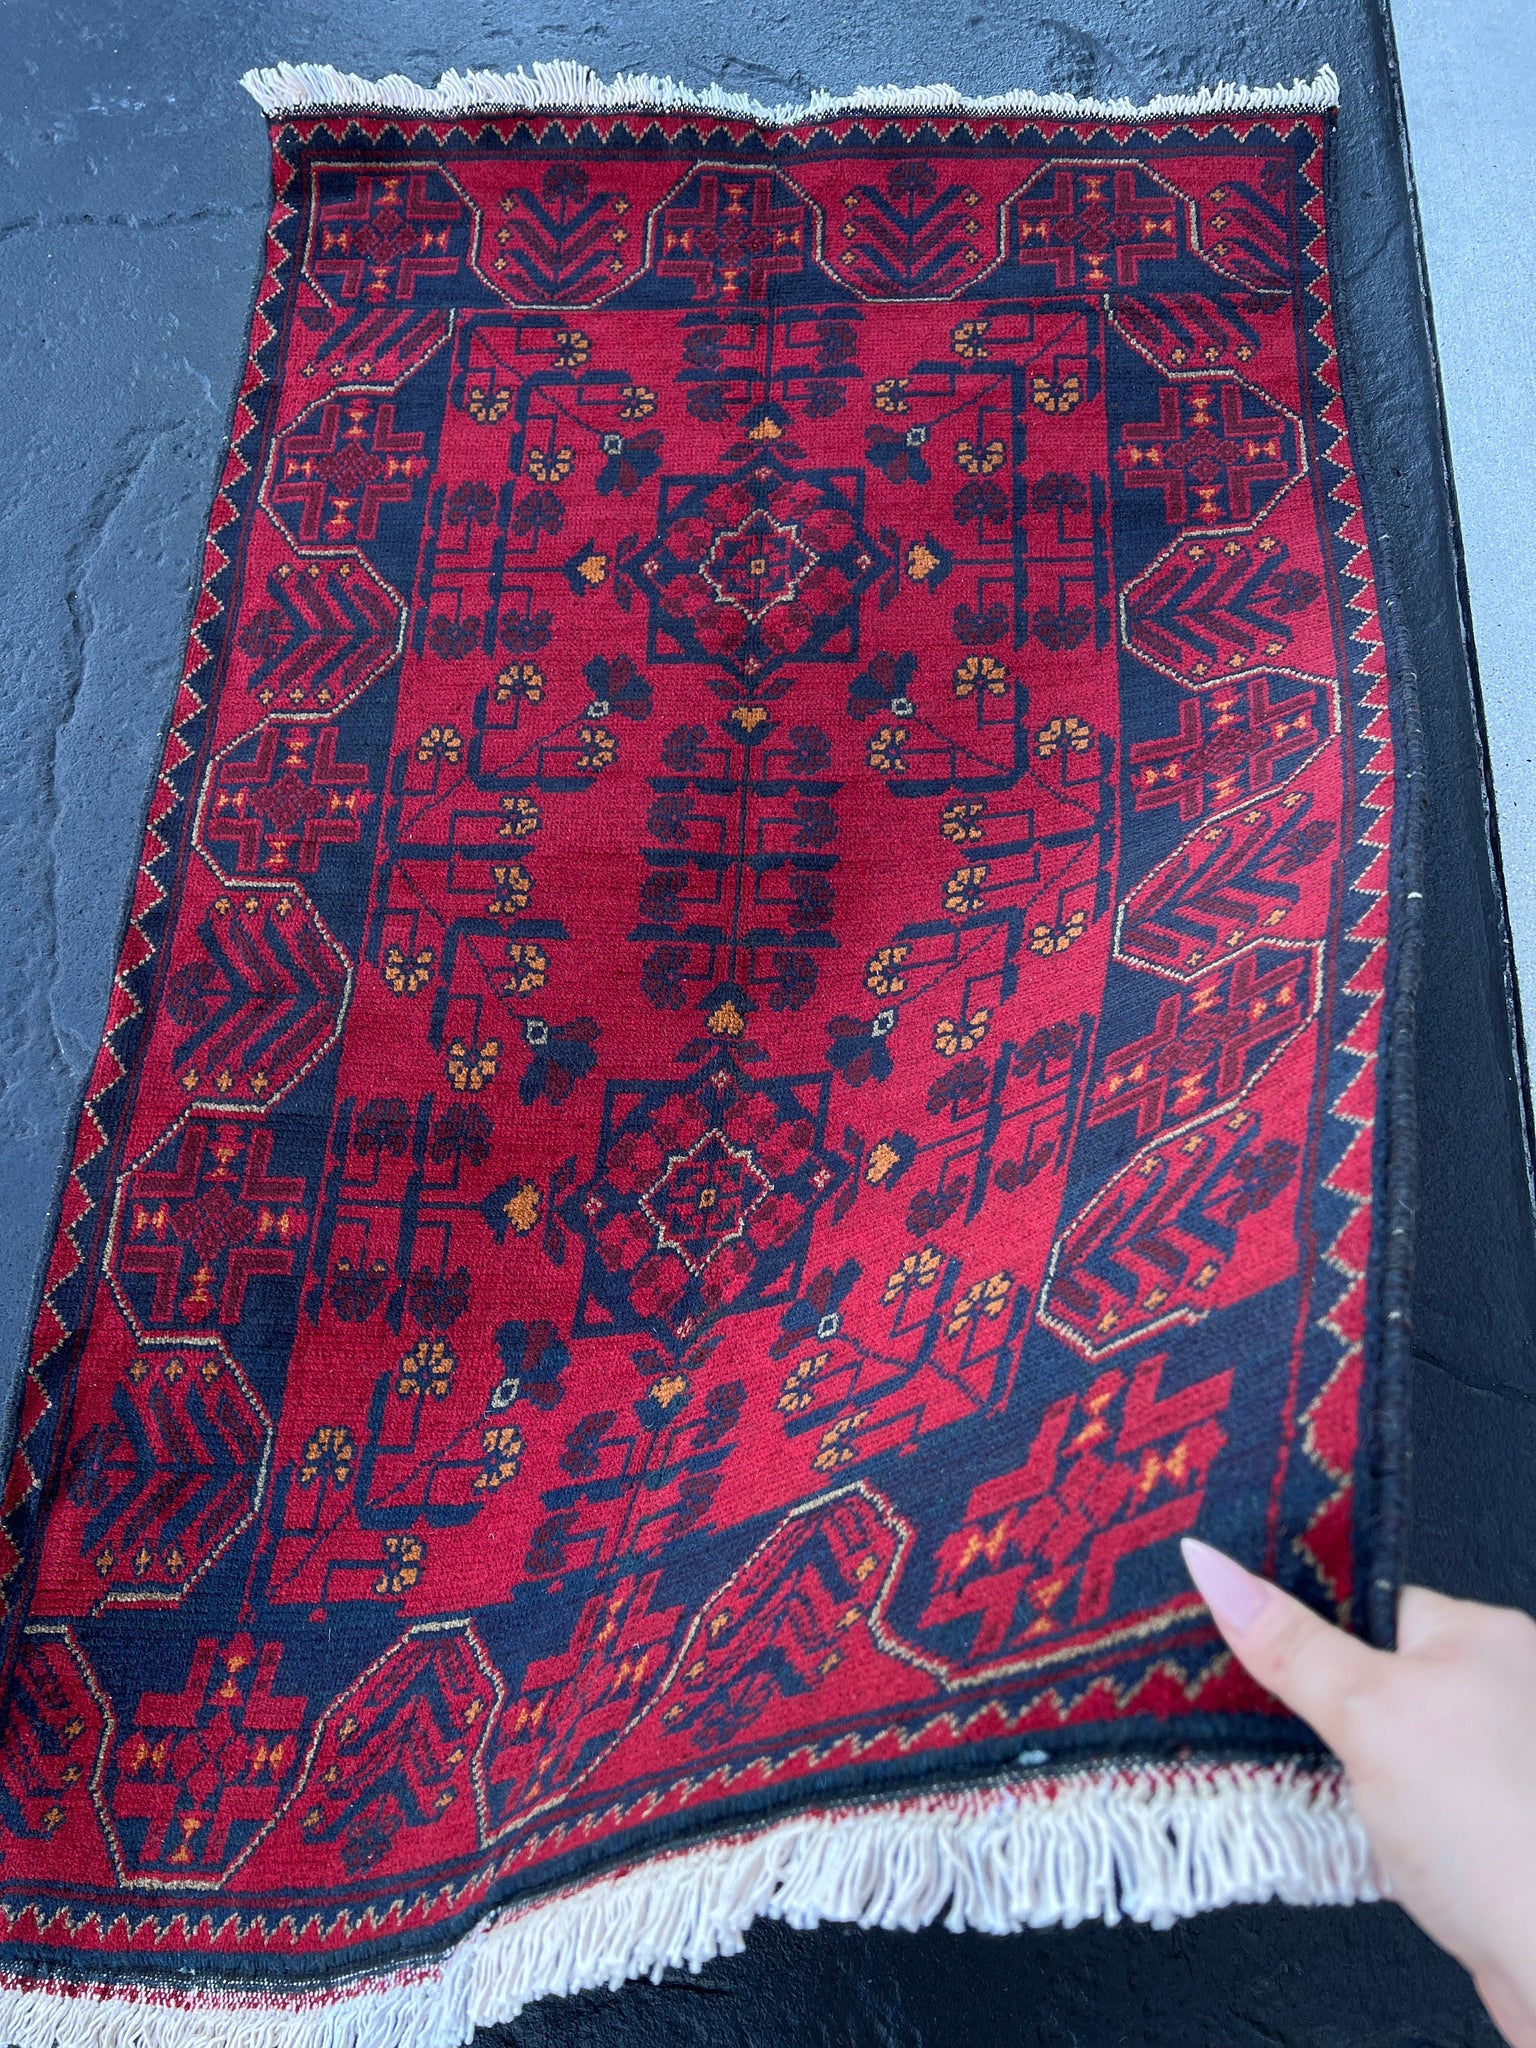 3x4 (90x120) Fair Trade Handmade Afghan Rug | Cherry Red Midnight Blue Brick Red Orange Beige White | Hand Knotted Oriental Turkish Floral